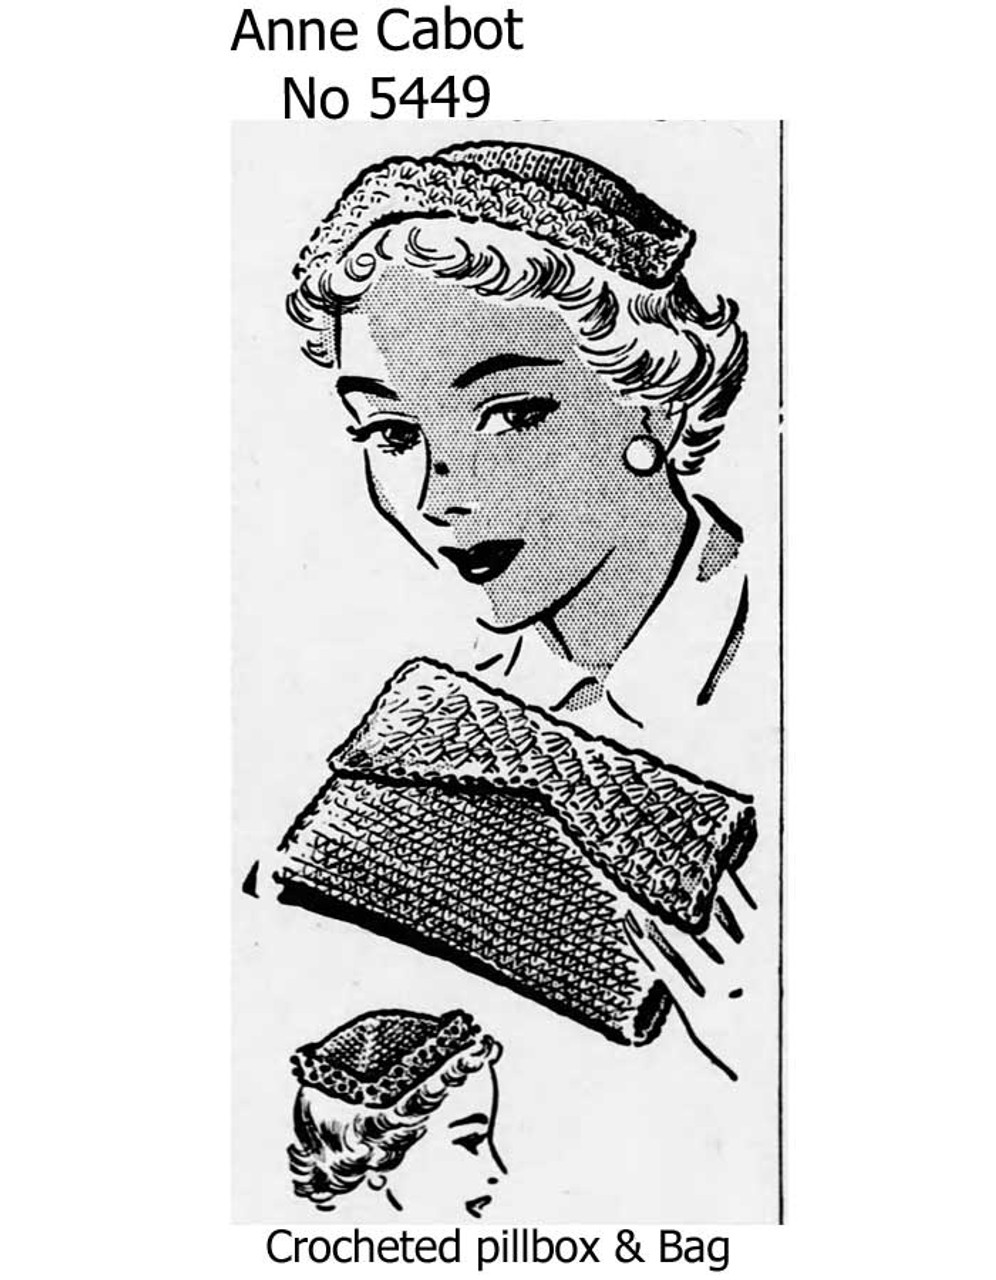 Vintage Crochet Pillbox Hat Pattern, Clutch Bag, Anne Cabot 5449